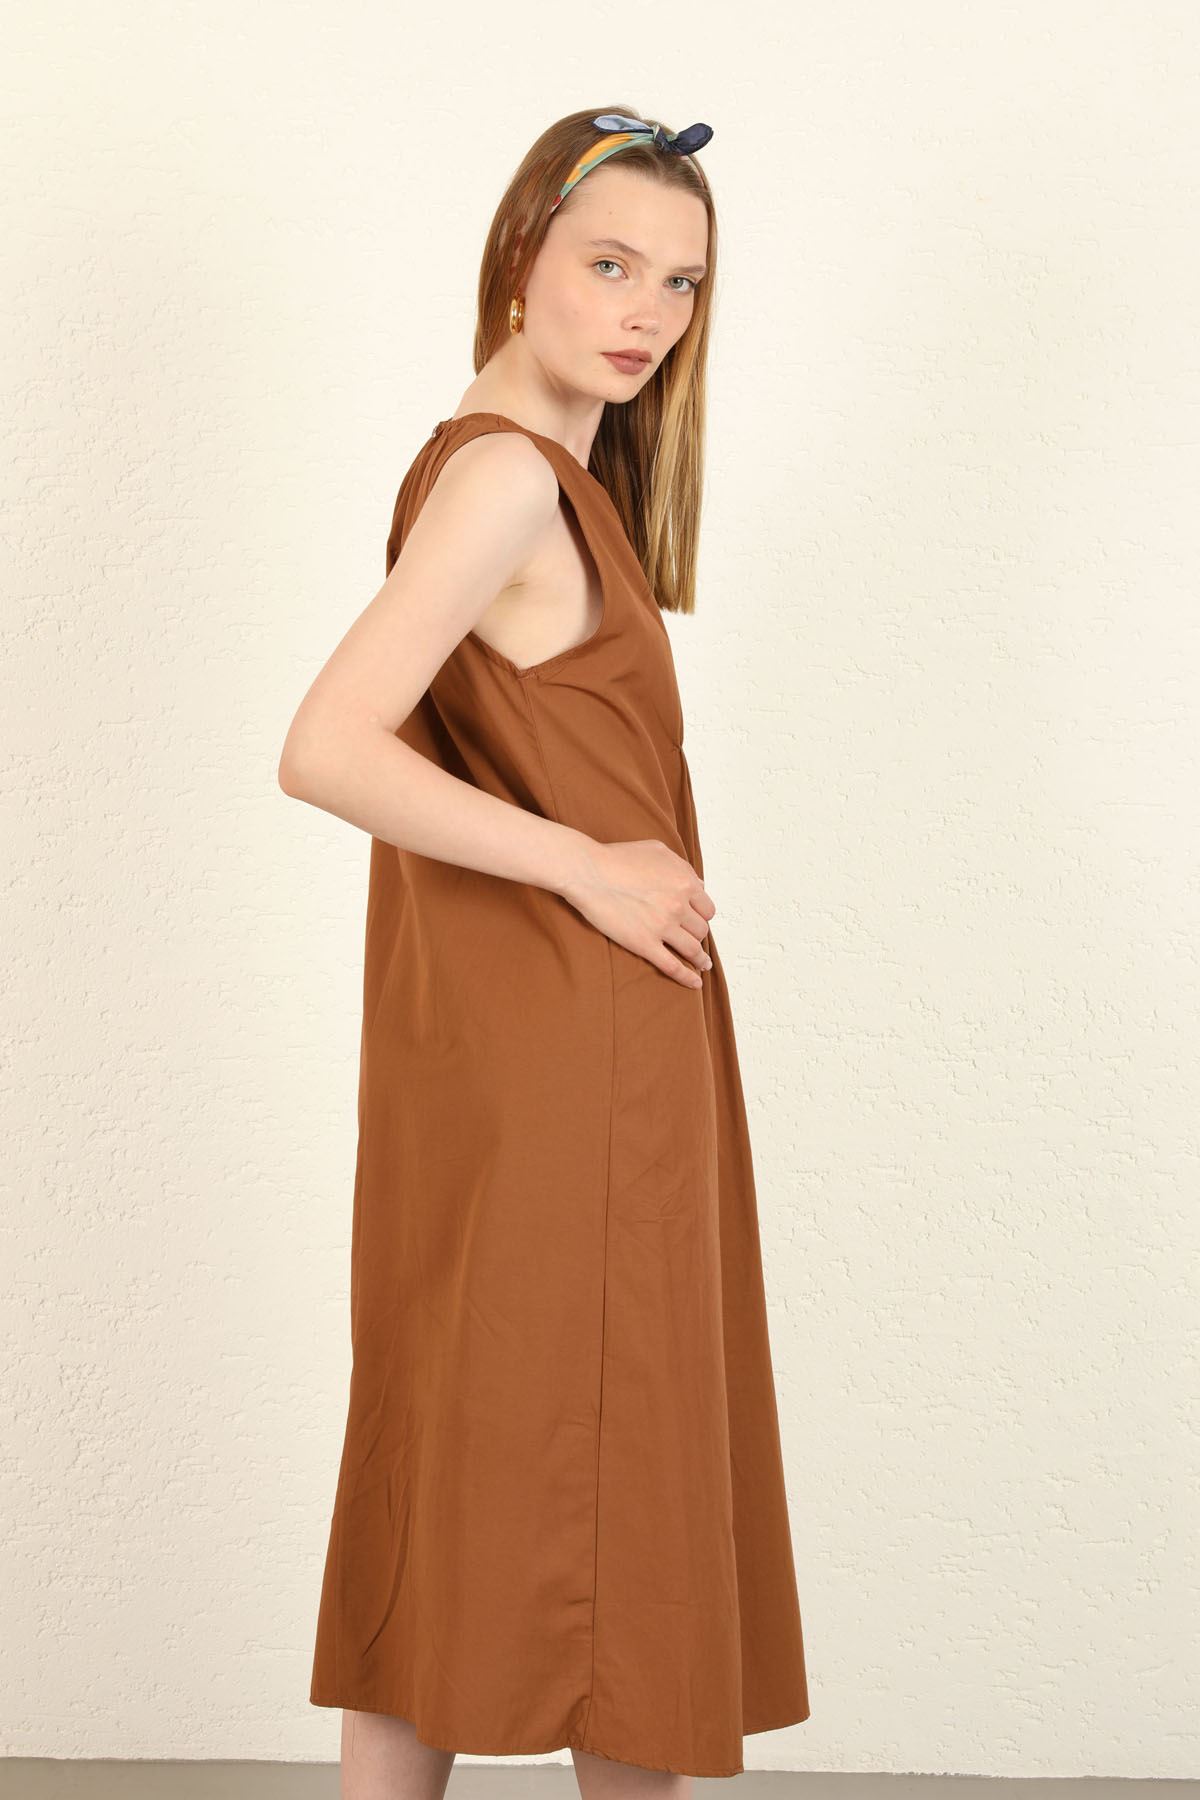 Woven Fabric Sleeveless Full Fit Gipped Women Dress - Brown